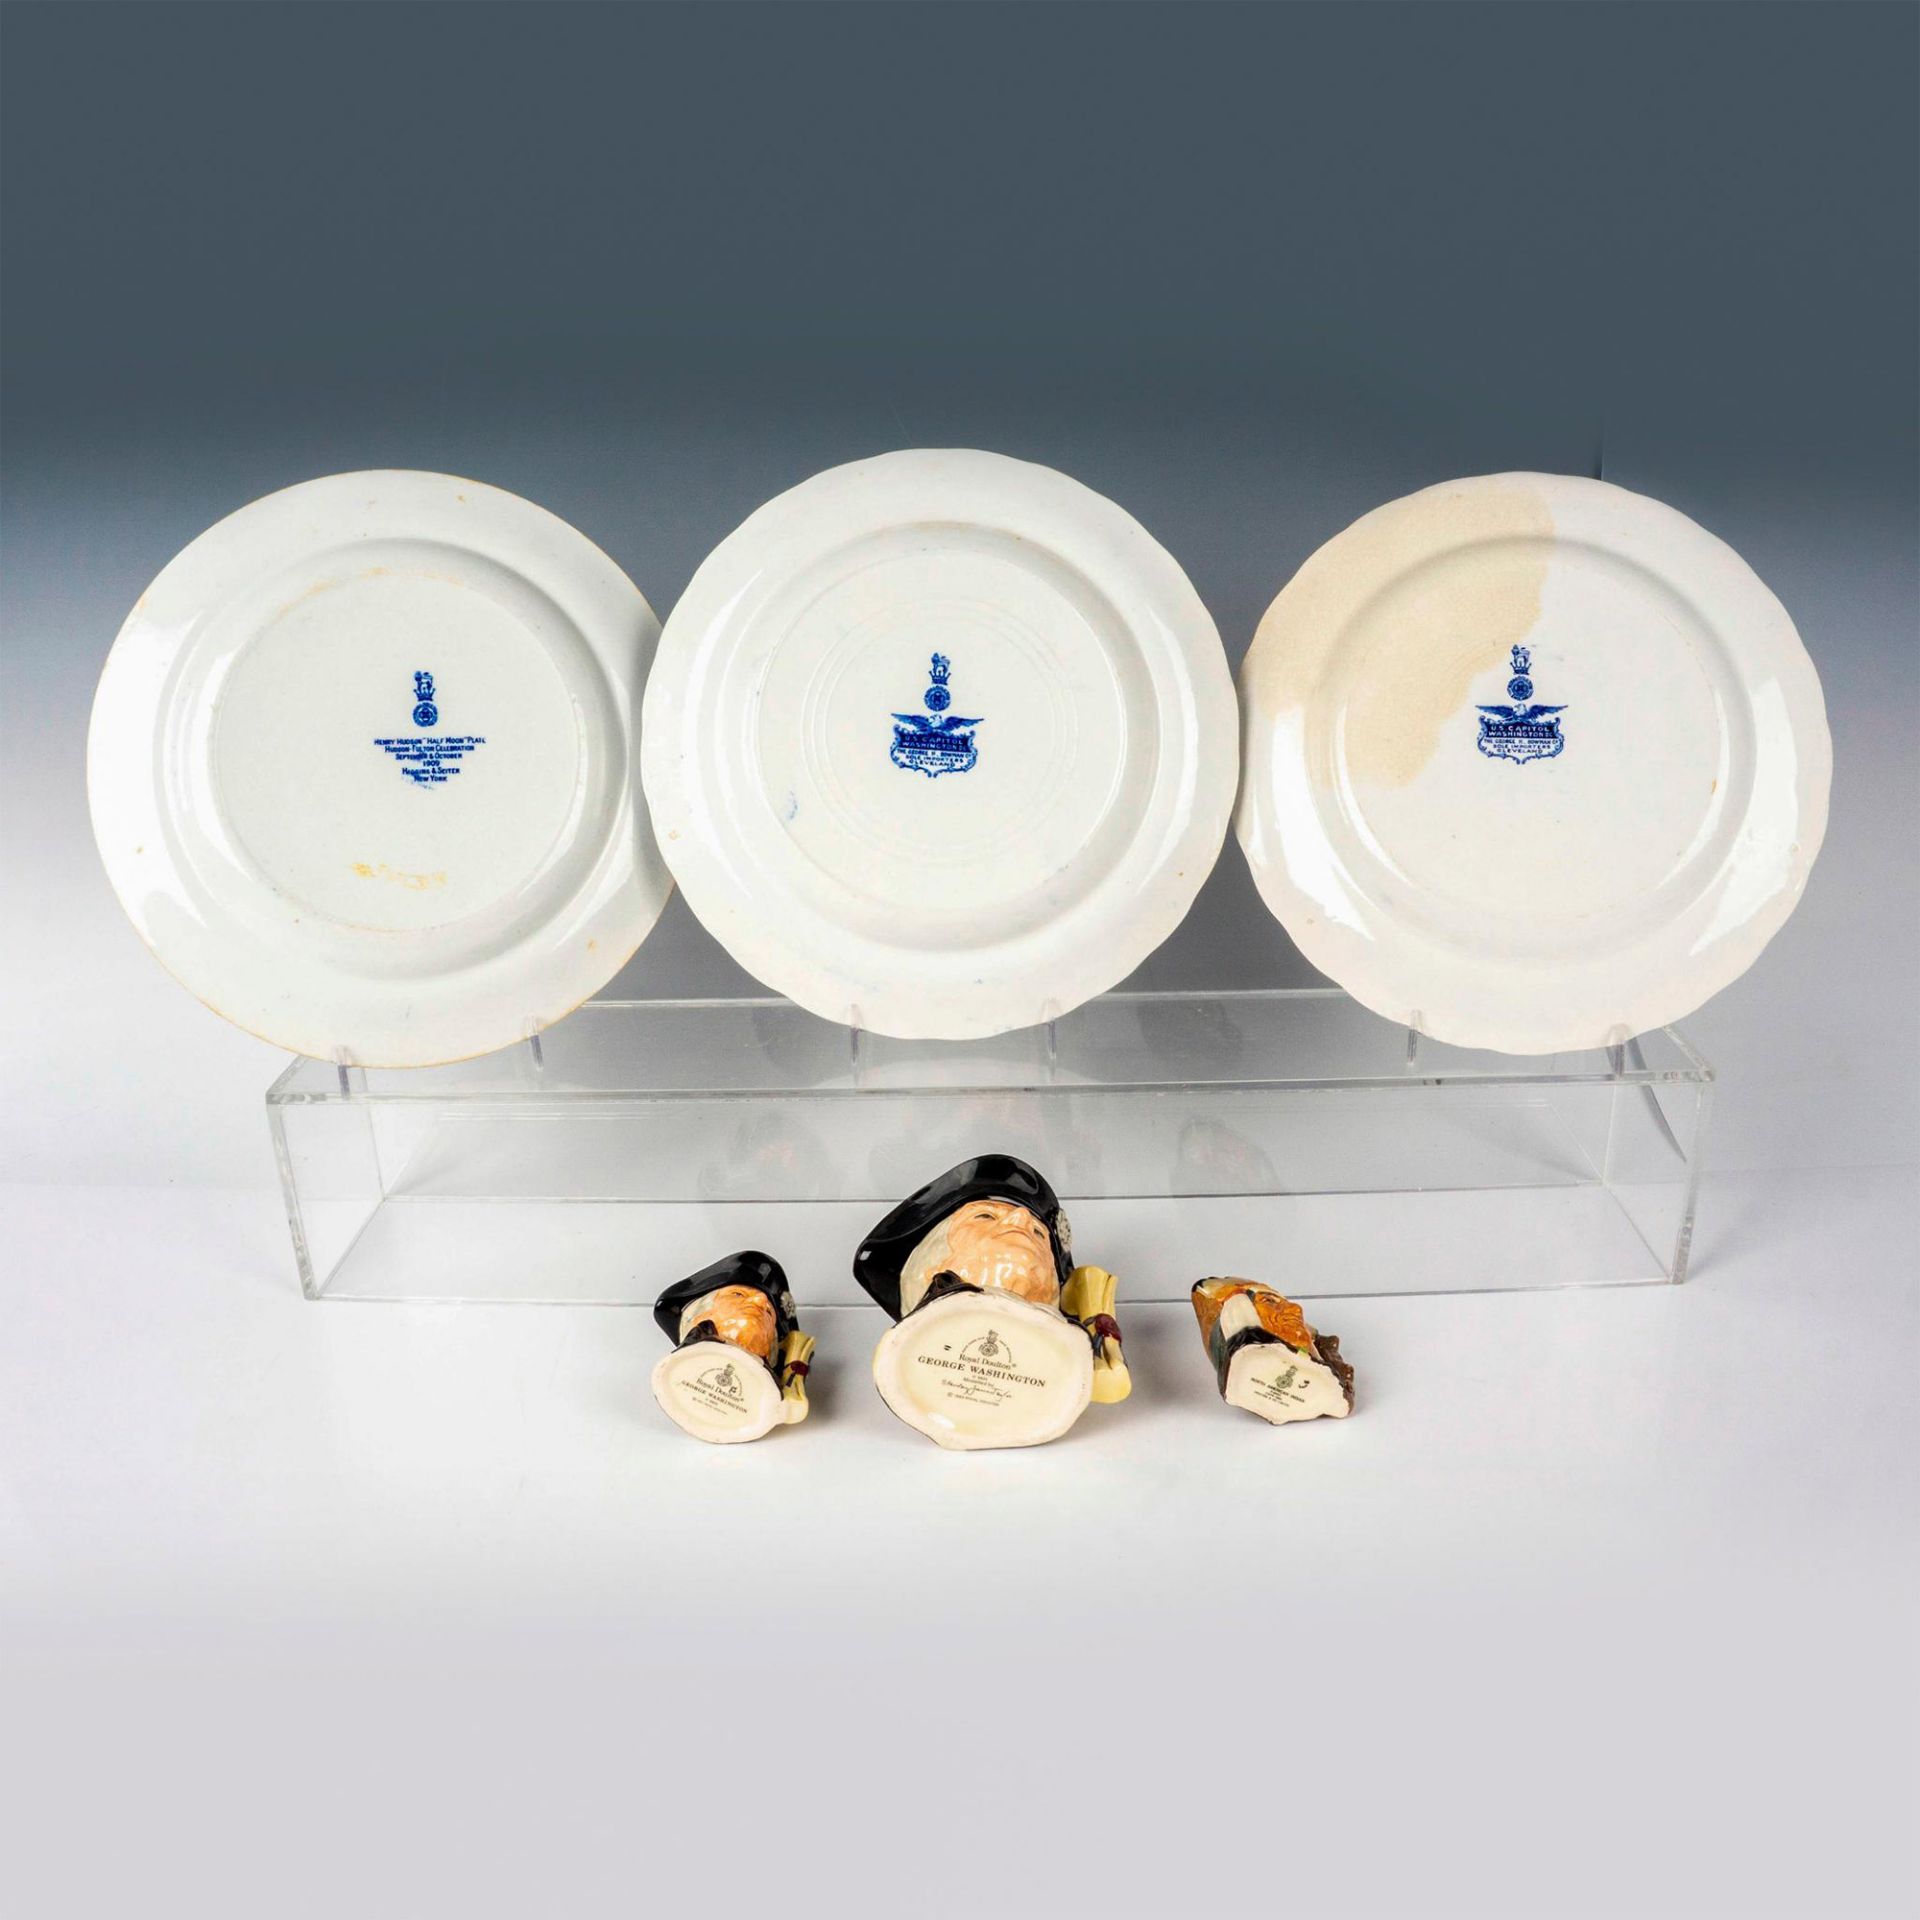 6pc Royal Doulton USA Grouping, Jugs & Plates - Image 3 of 3